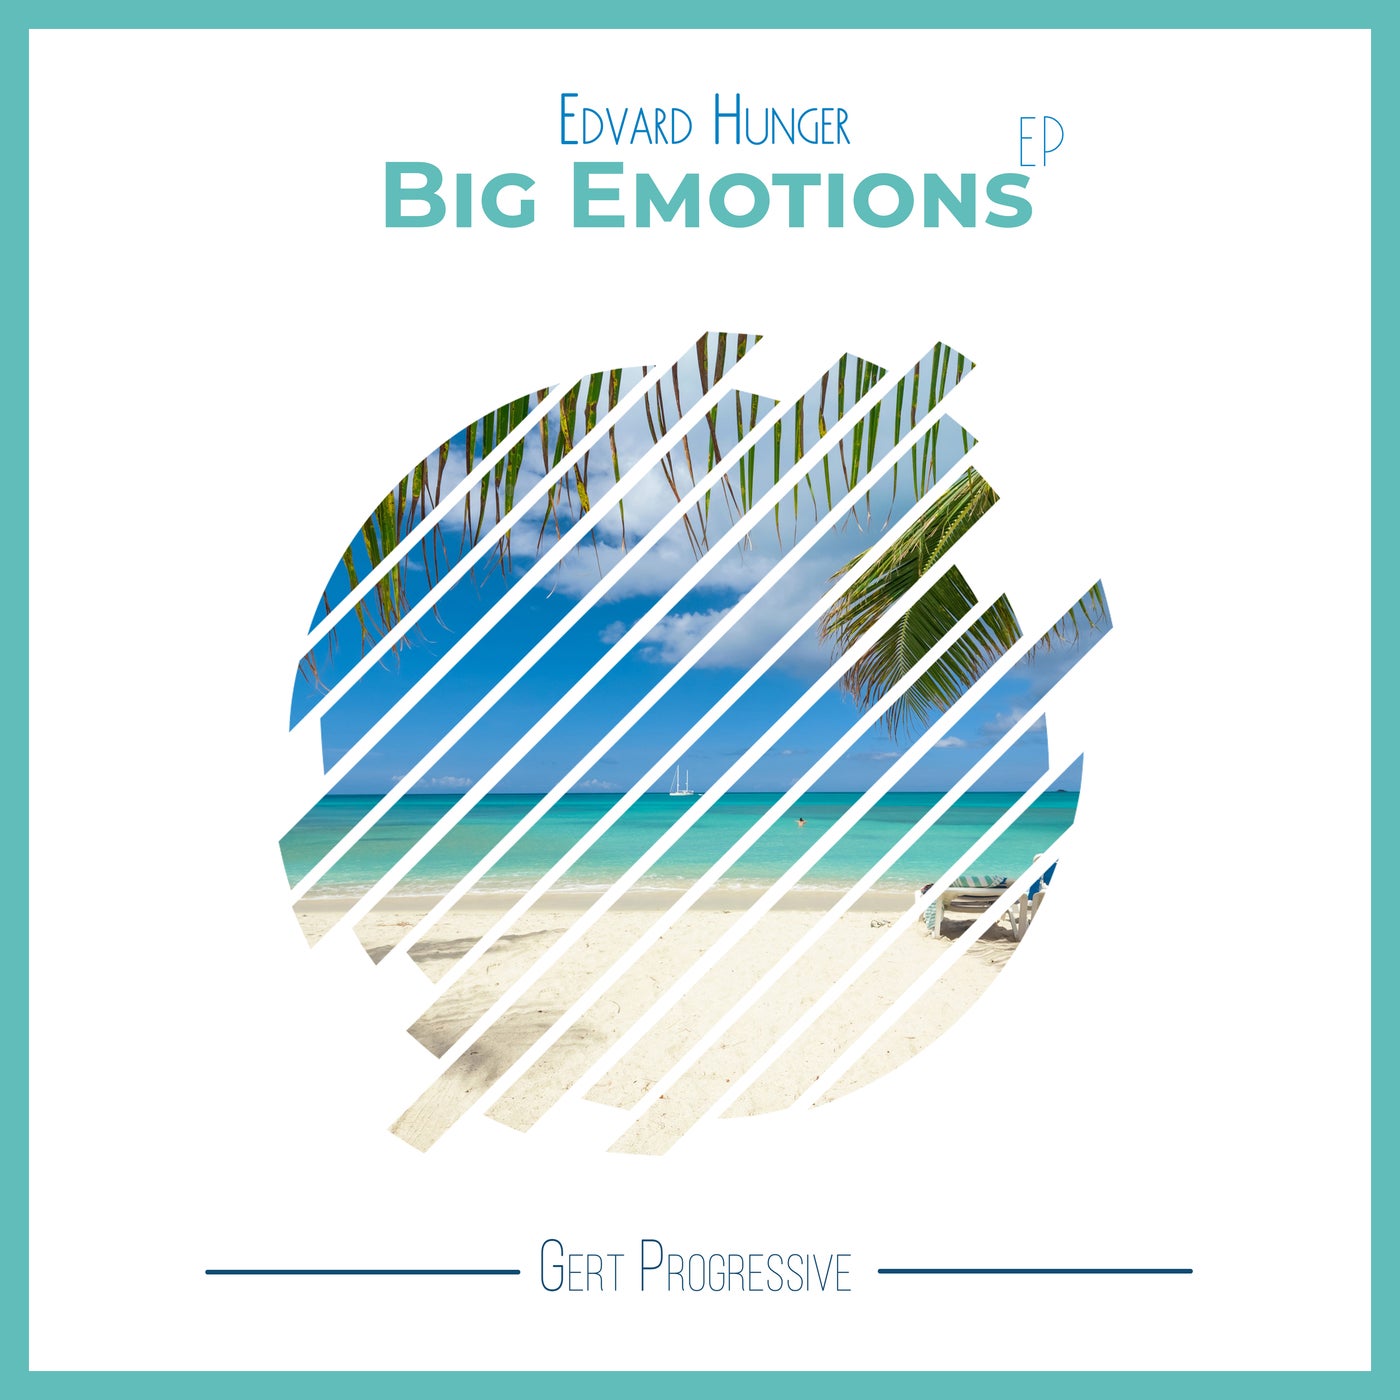 Edvard Hunger - Big Emotions [Gert Progressive]